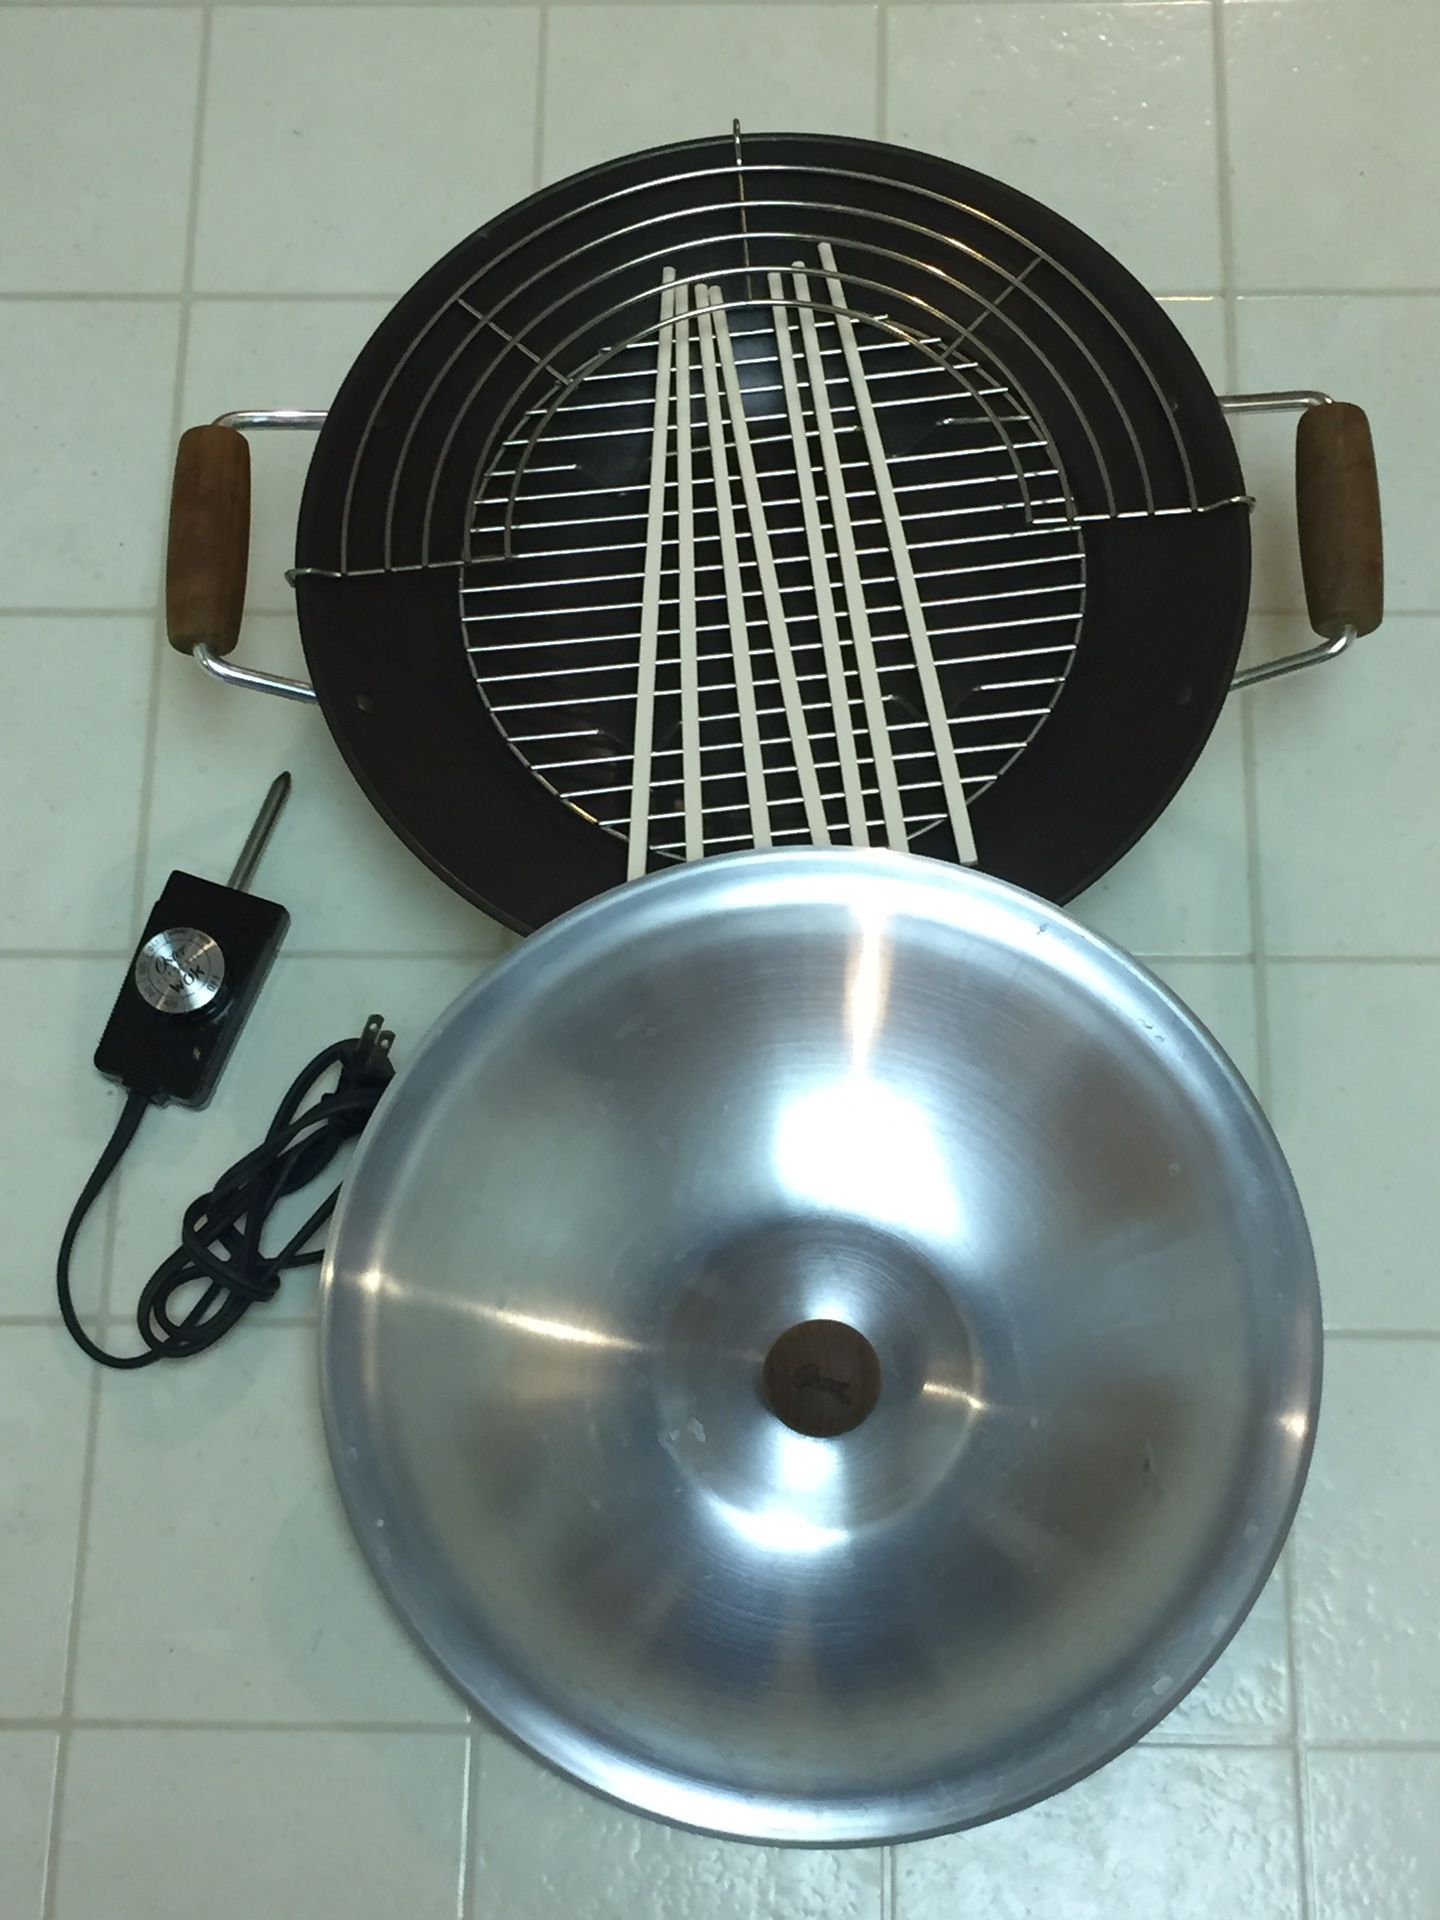 Oster electric wok set